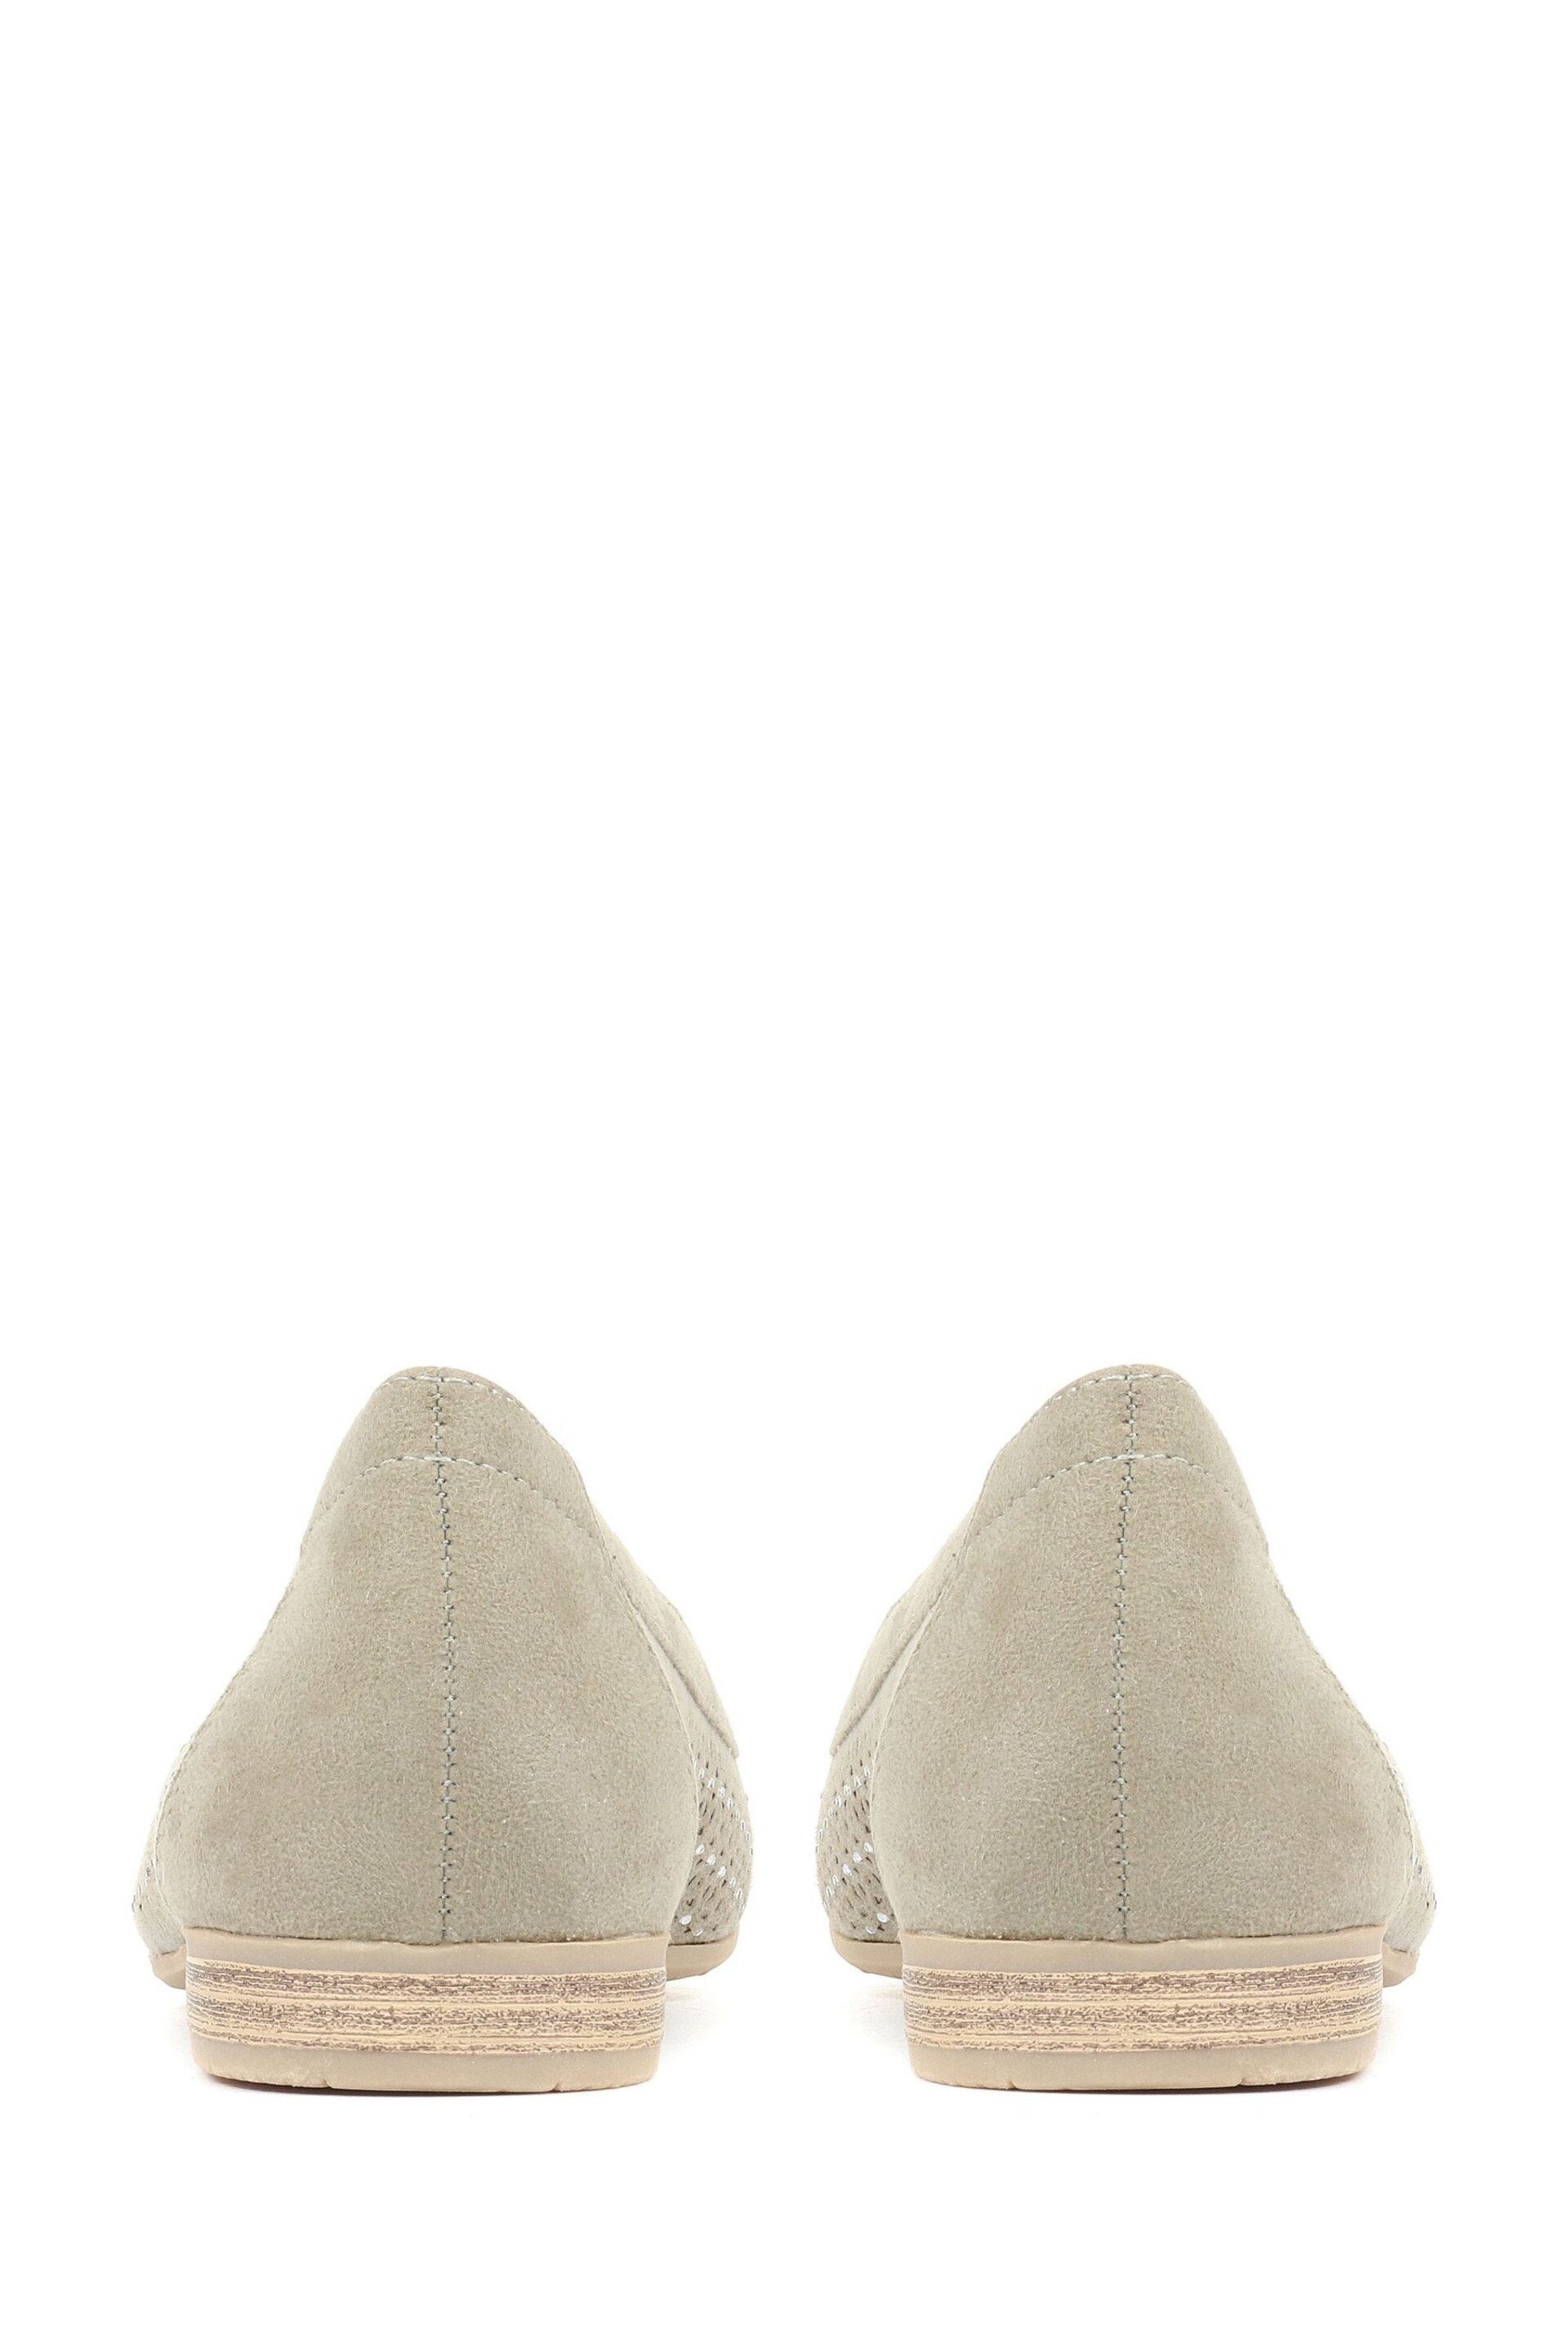 Pavers Natural Slip-On Embellished Loafers - Image 3 of 5